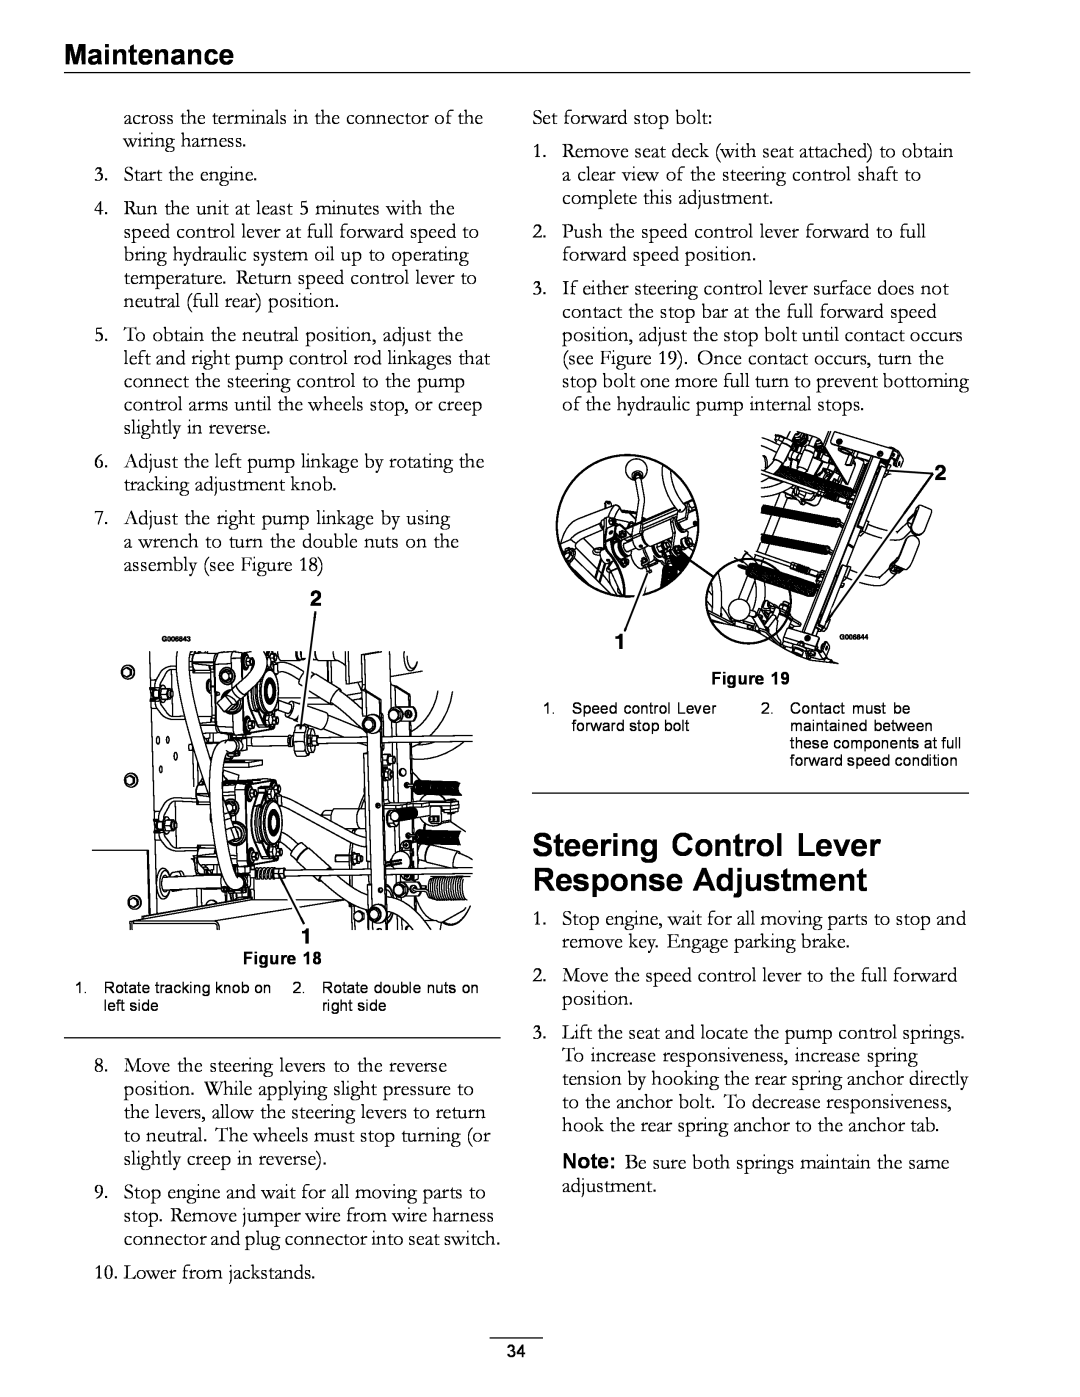 Exmark 850 manual Steering Control Lever, Response Adjustment, Maintenance 